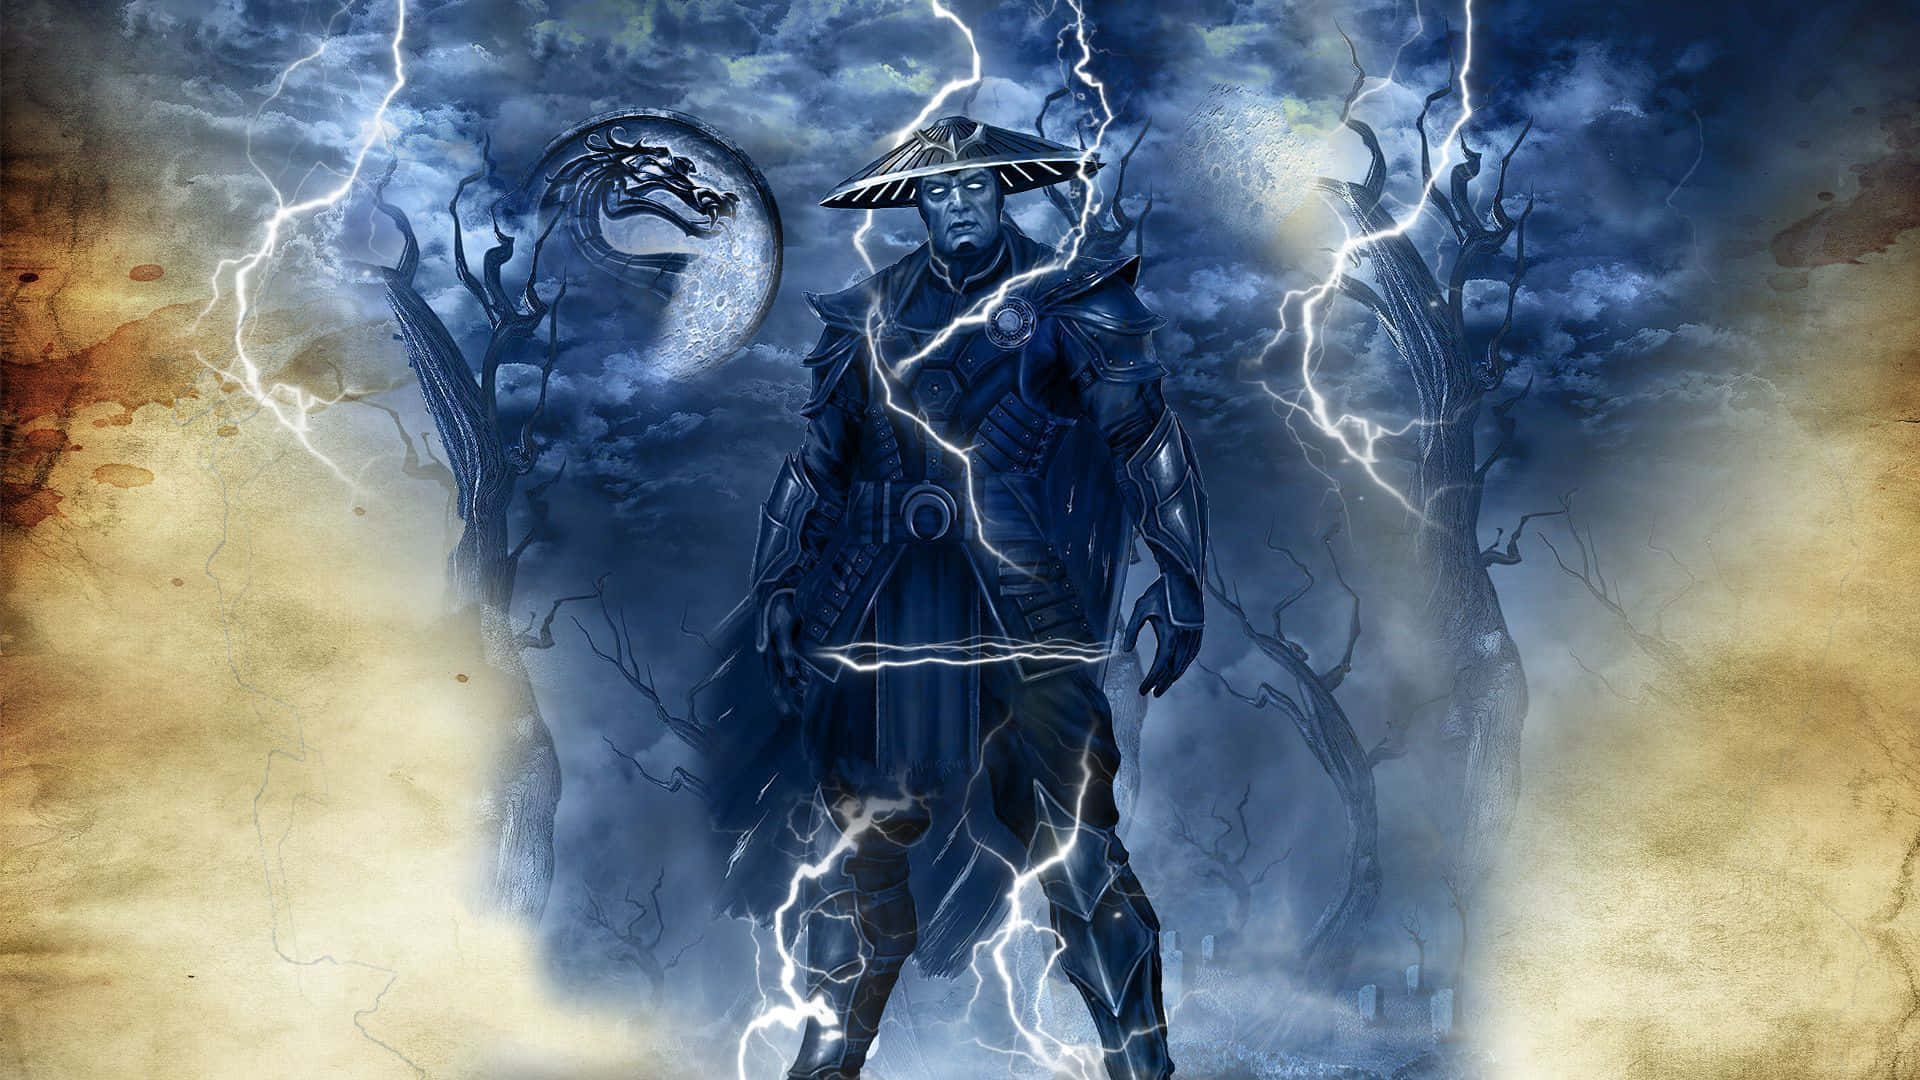 Mortal Kombat Raiden unleashing lightning fury Wallpaper